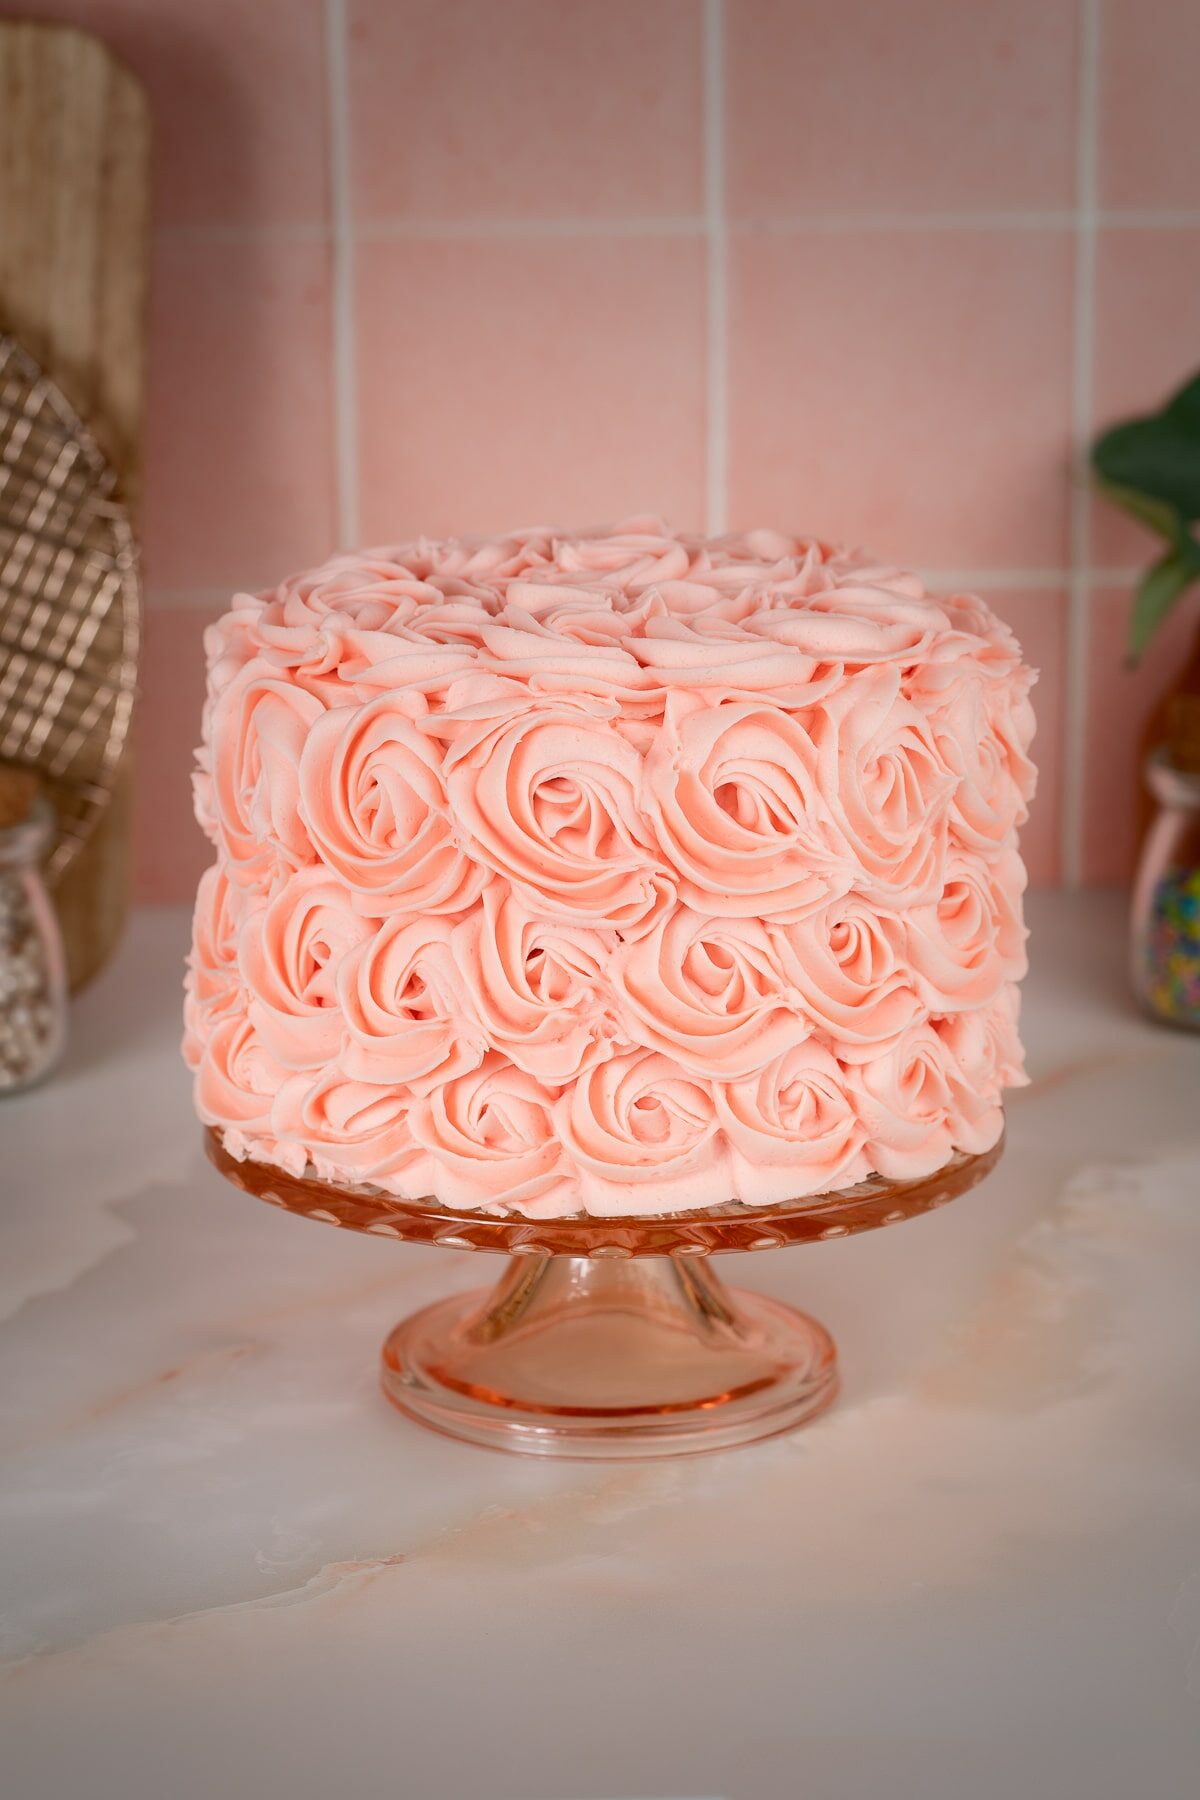 rosette cake on cake stand.